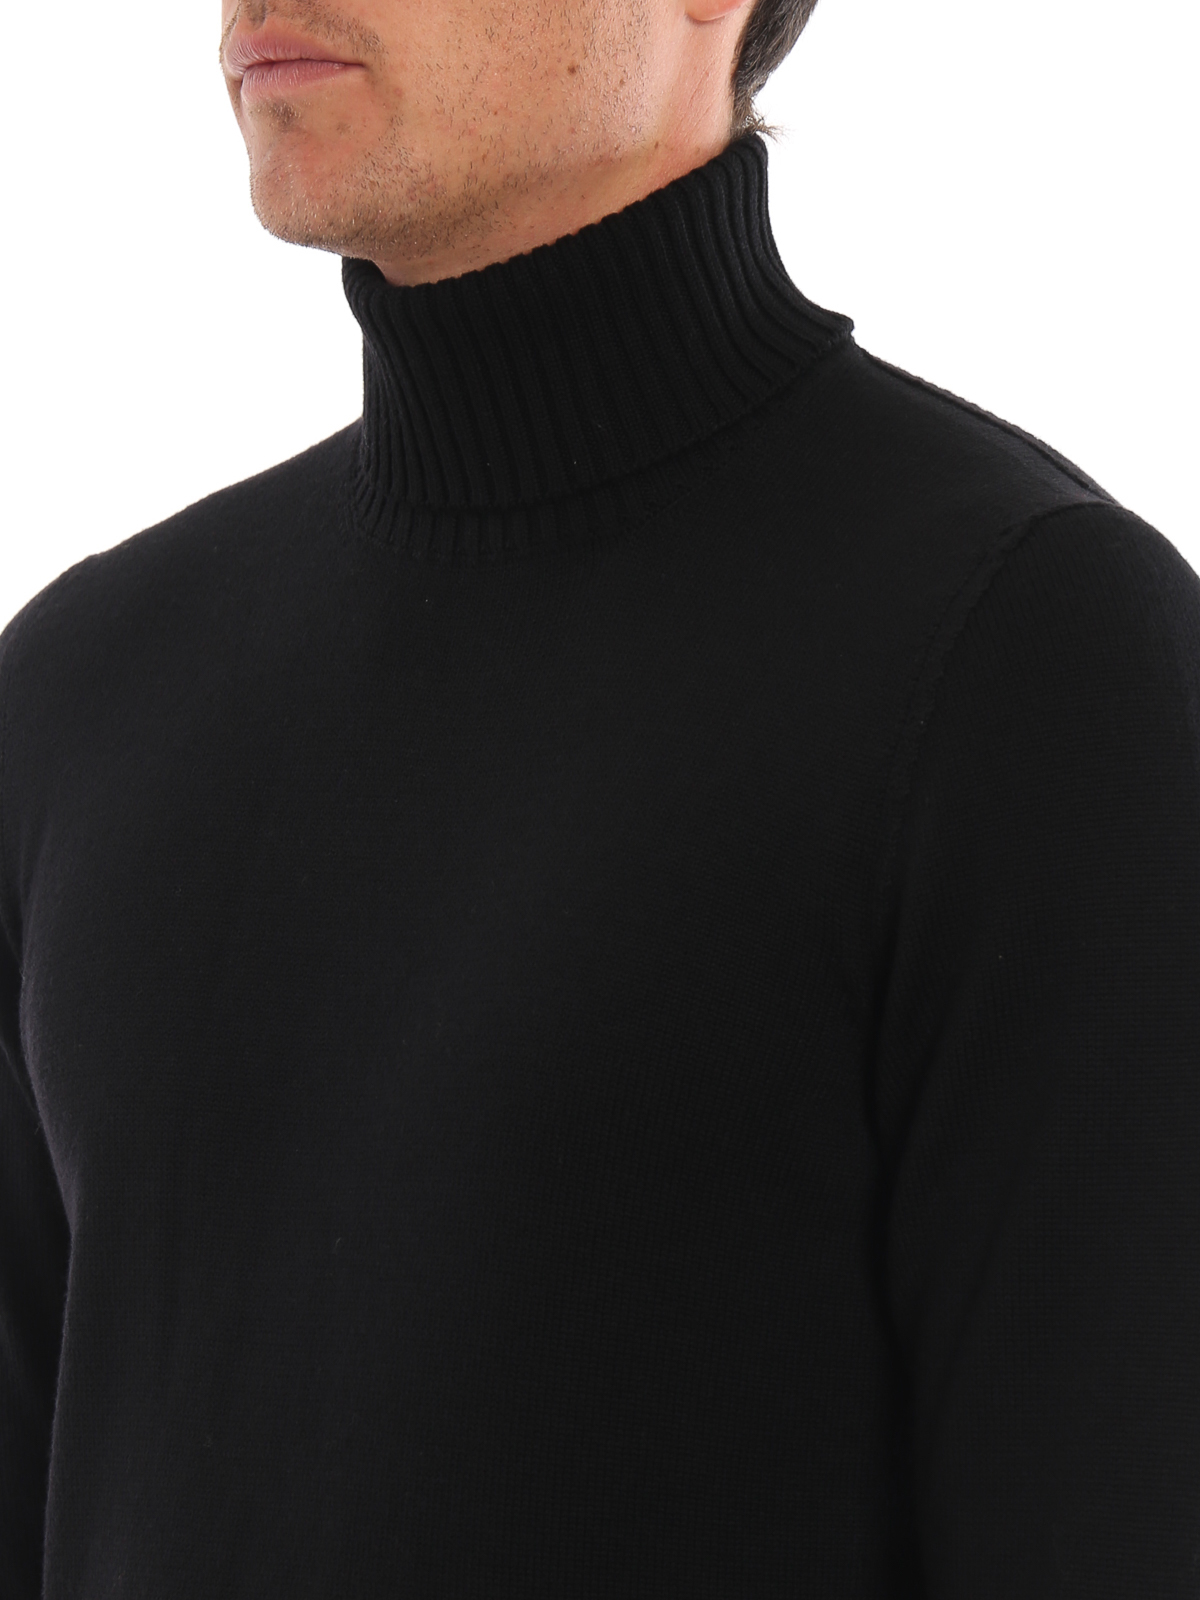 Drumohr - Black merino wool turtleneck sweater - Turtlenecks & Polo ...